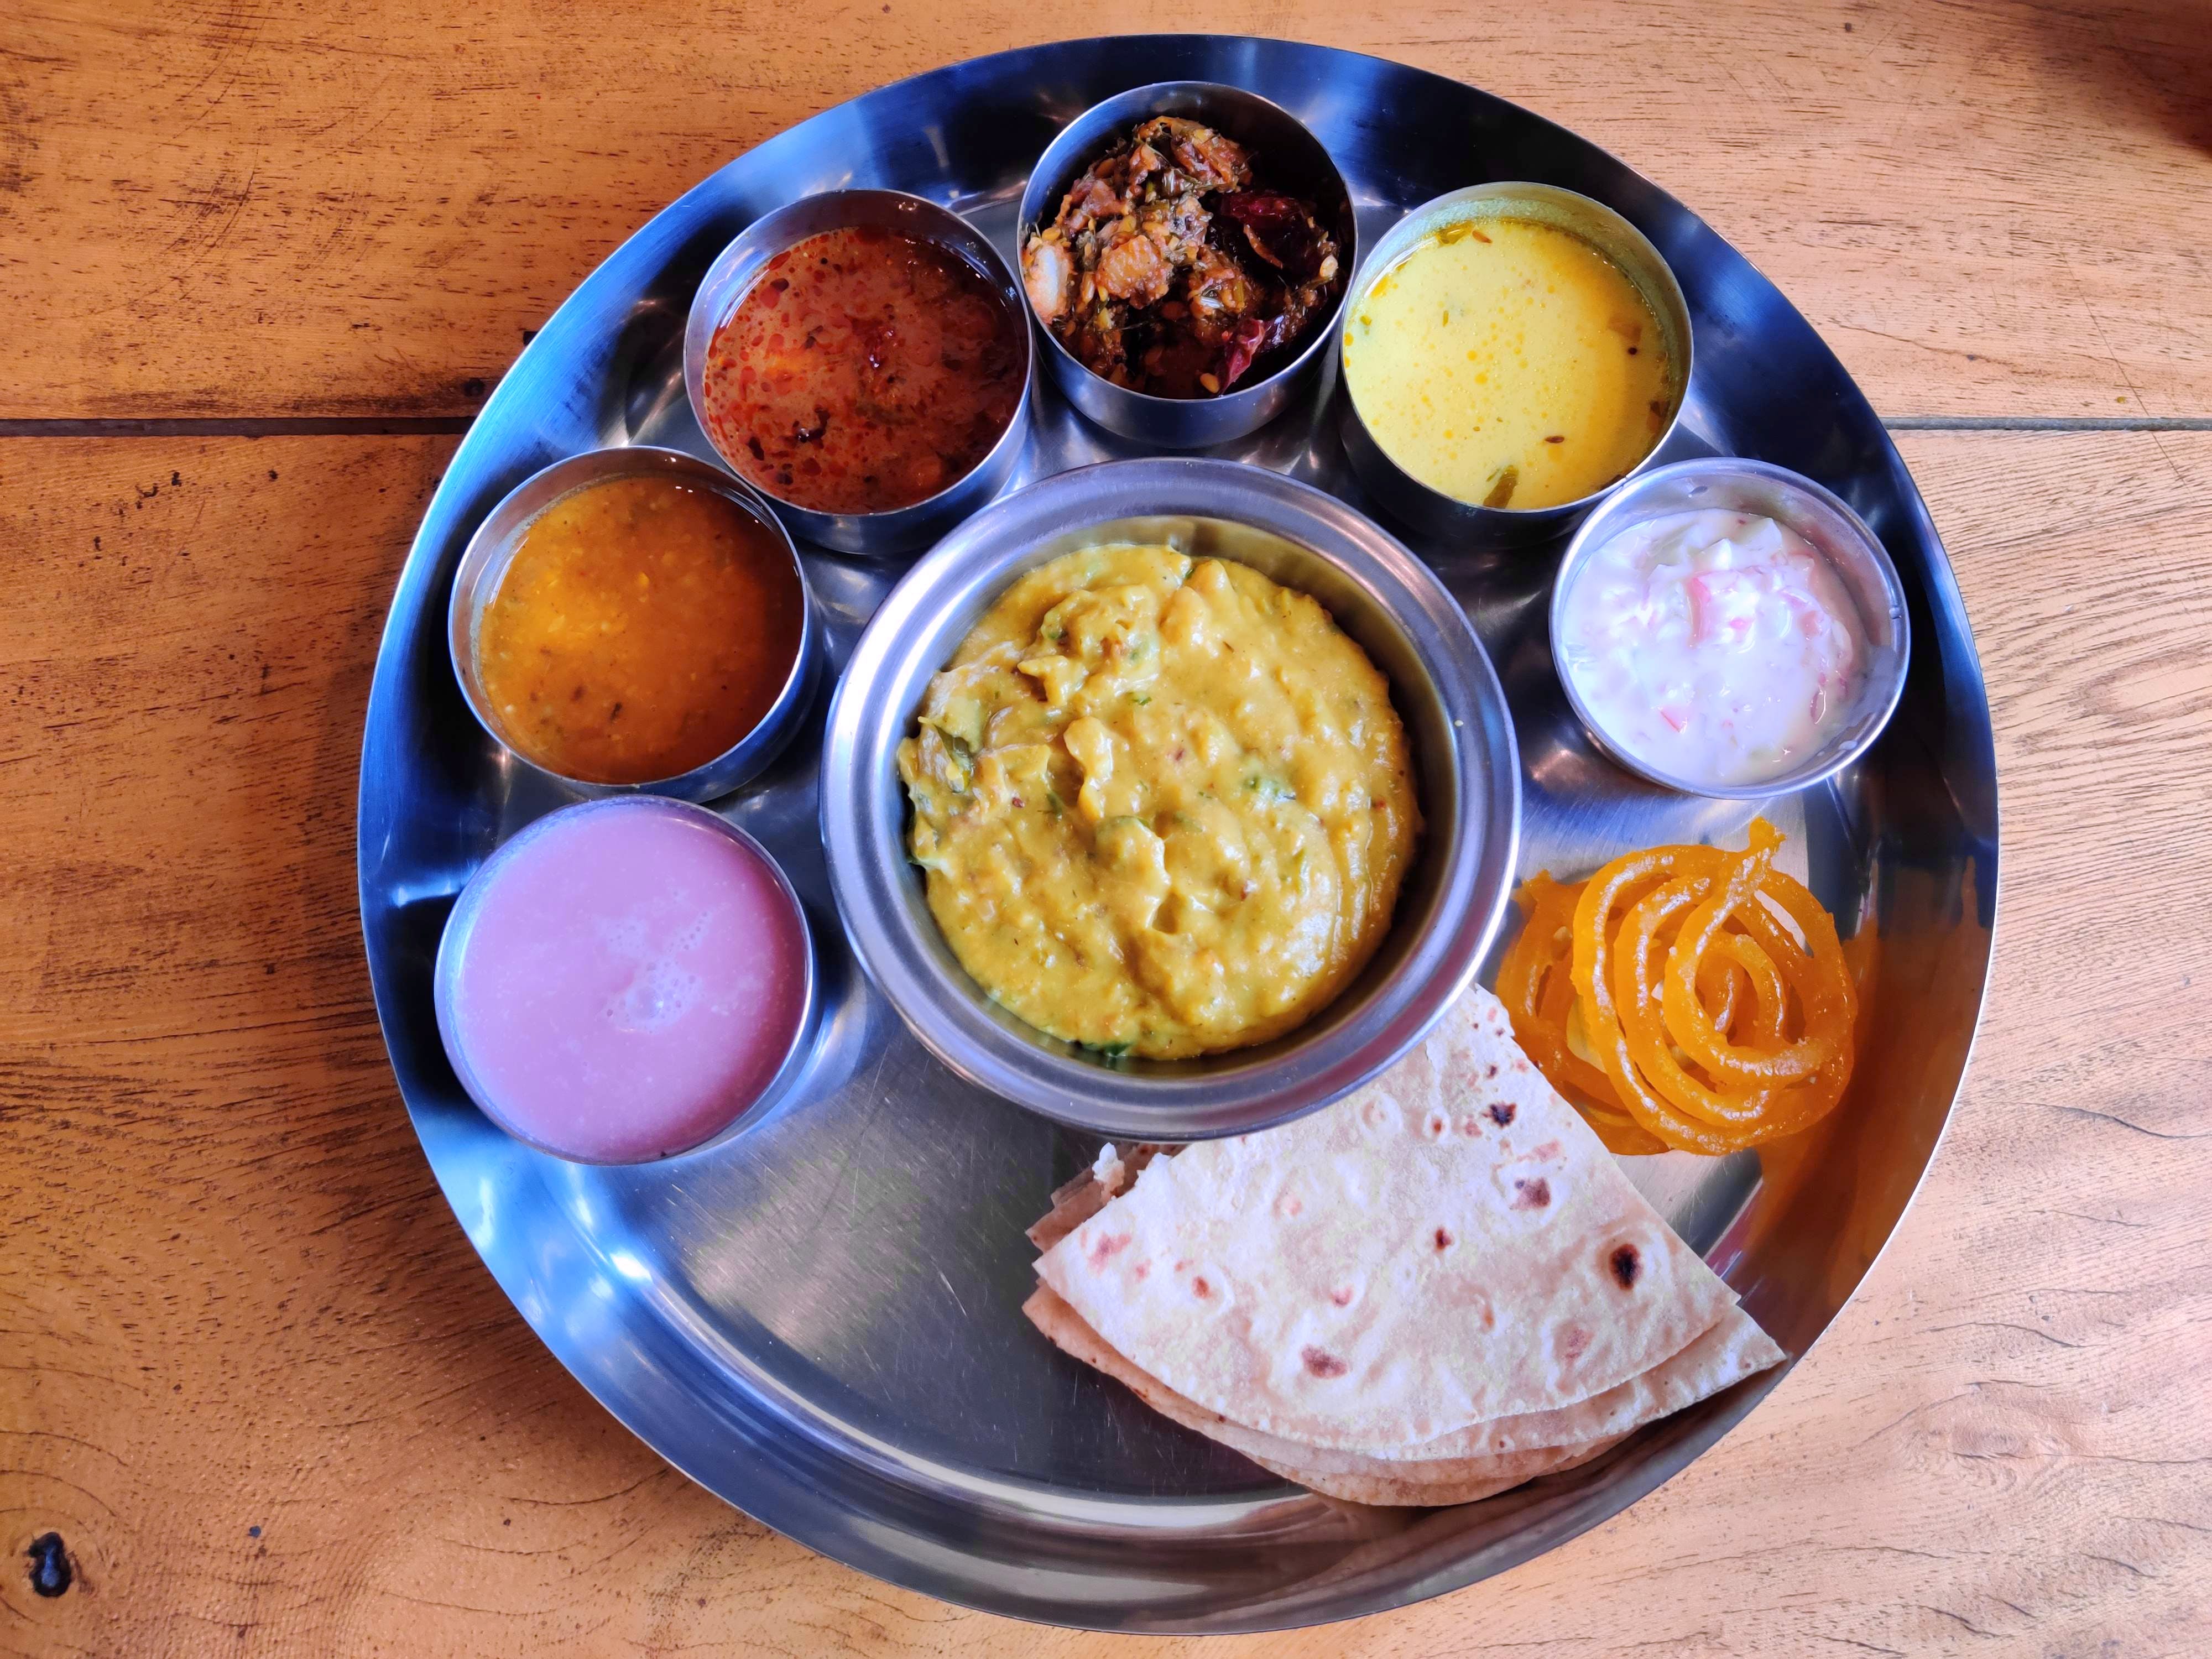 Dish,Food,Cuisine,Ingredient,Meal,Produce,Indian cuisine,Breakfast,Brunch,Rajasthani cuisine